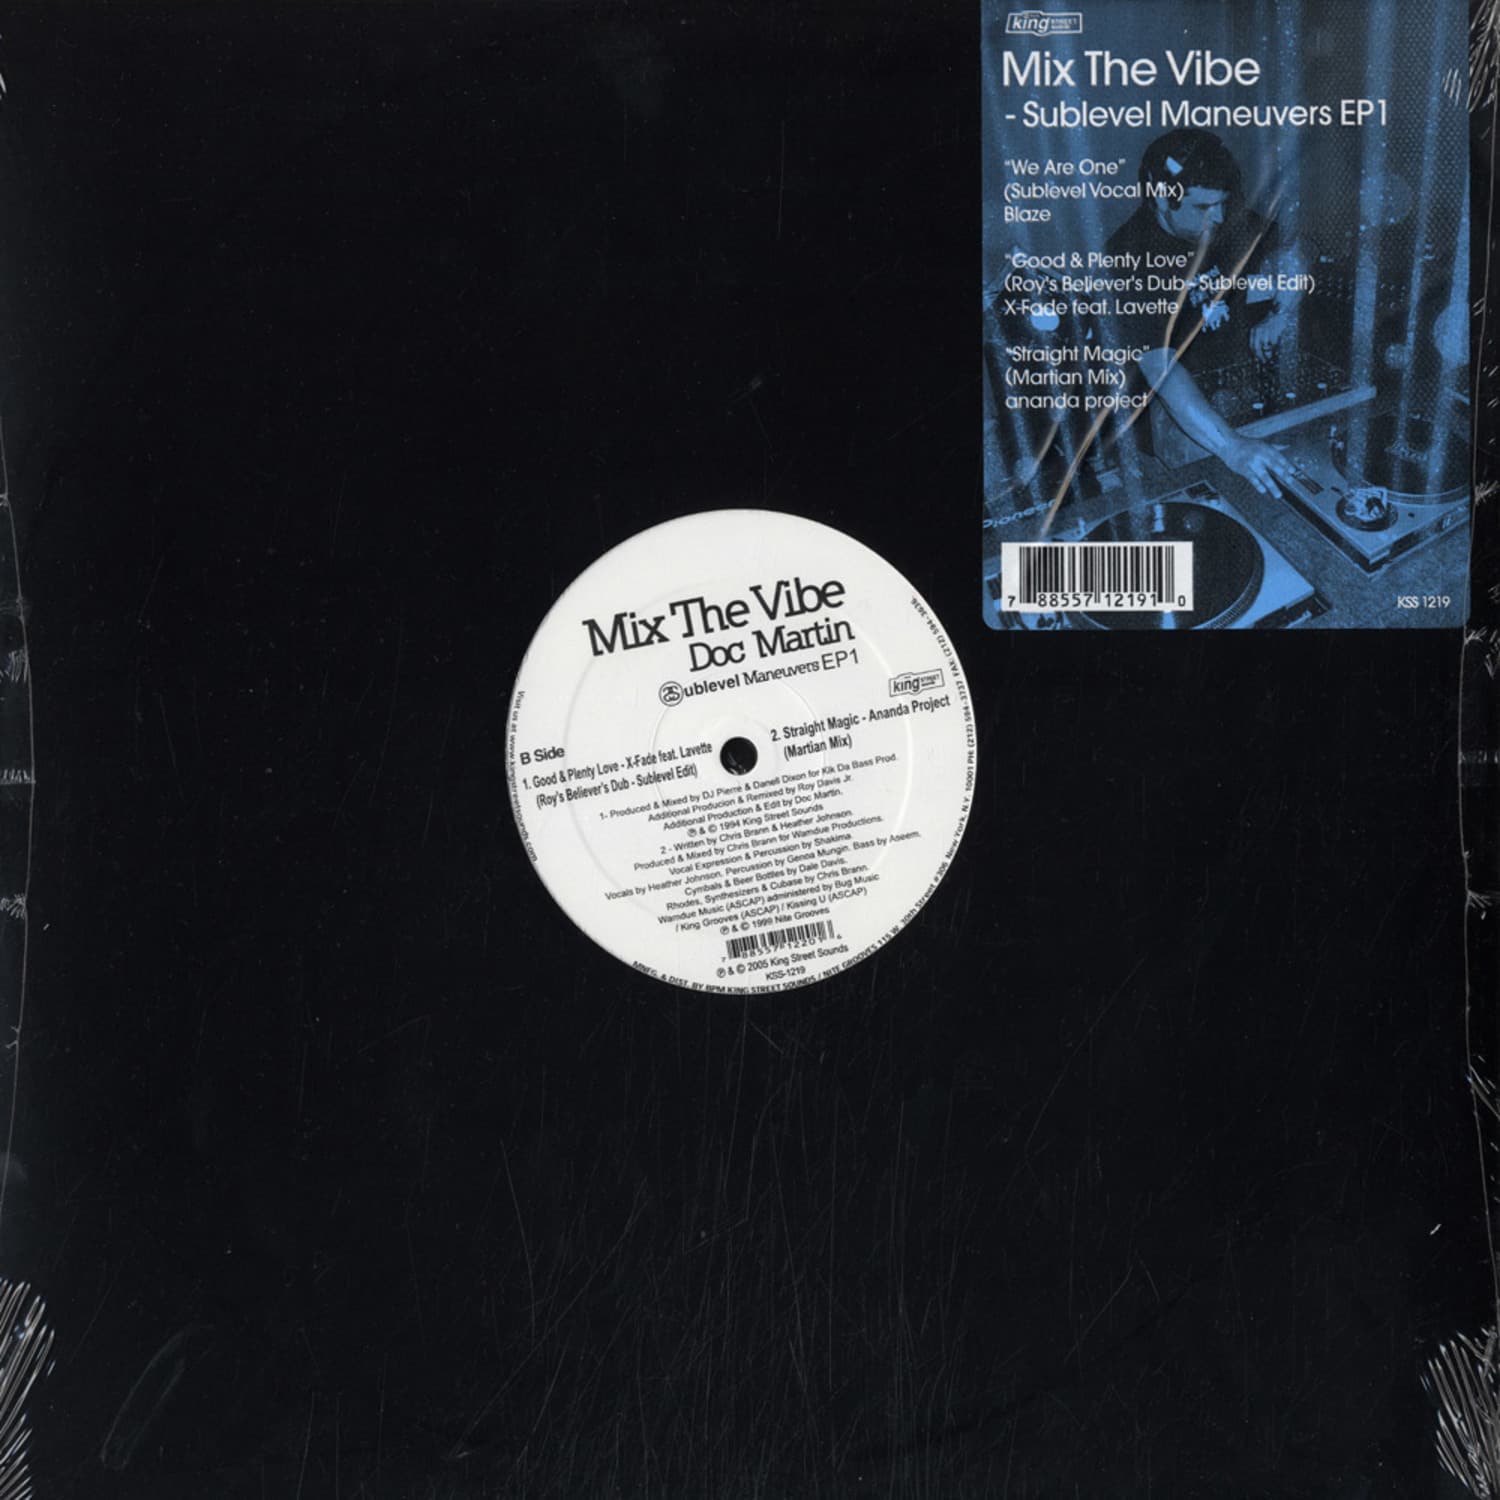 Mix The Vibe - Doc Martin - SUBLEVEL MANEUVERS EP1